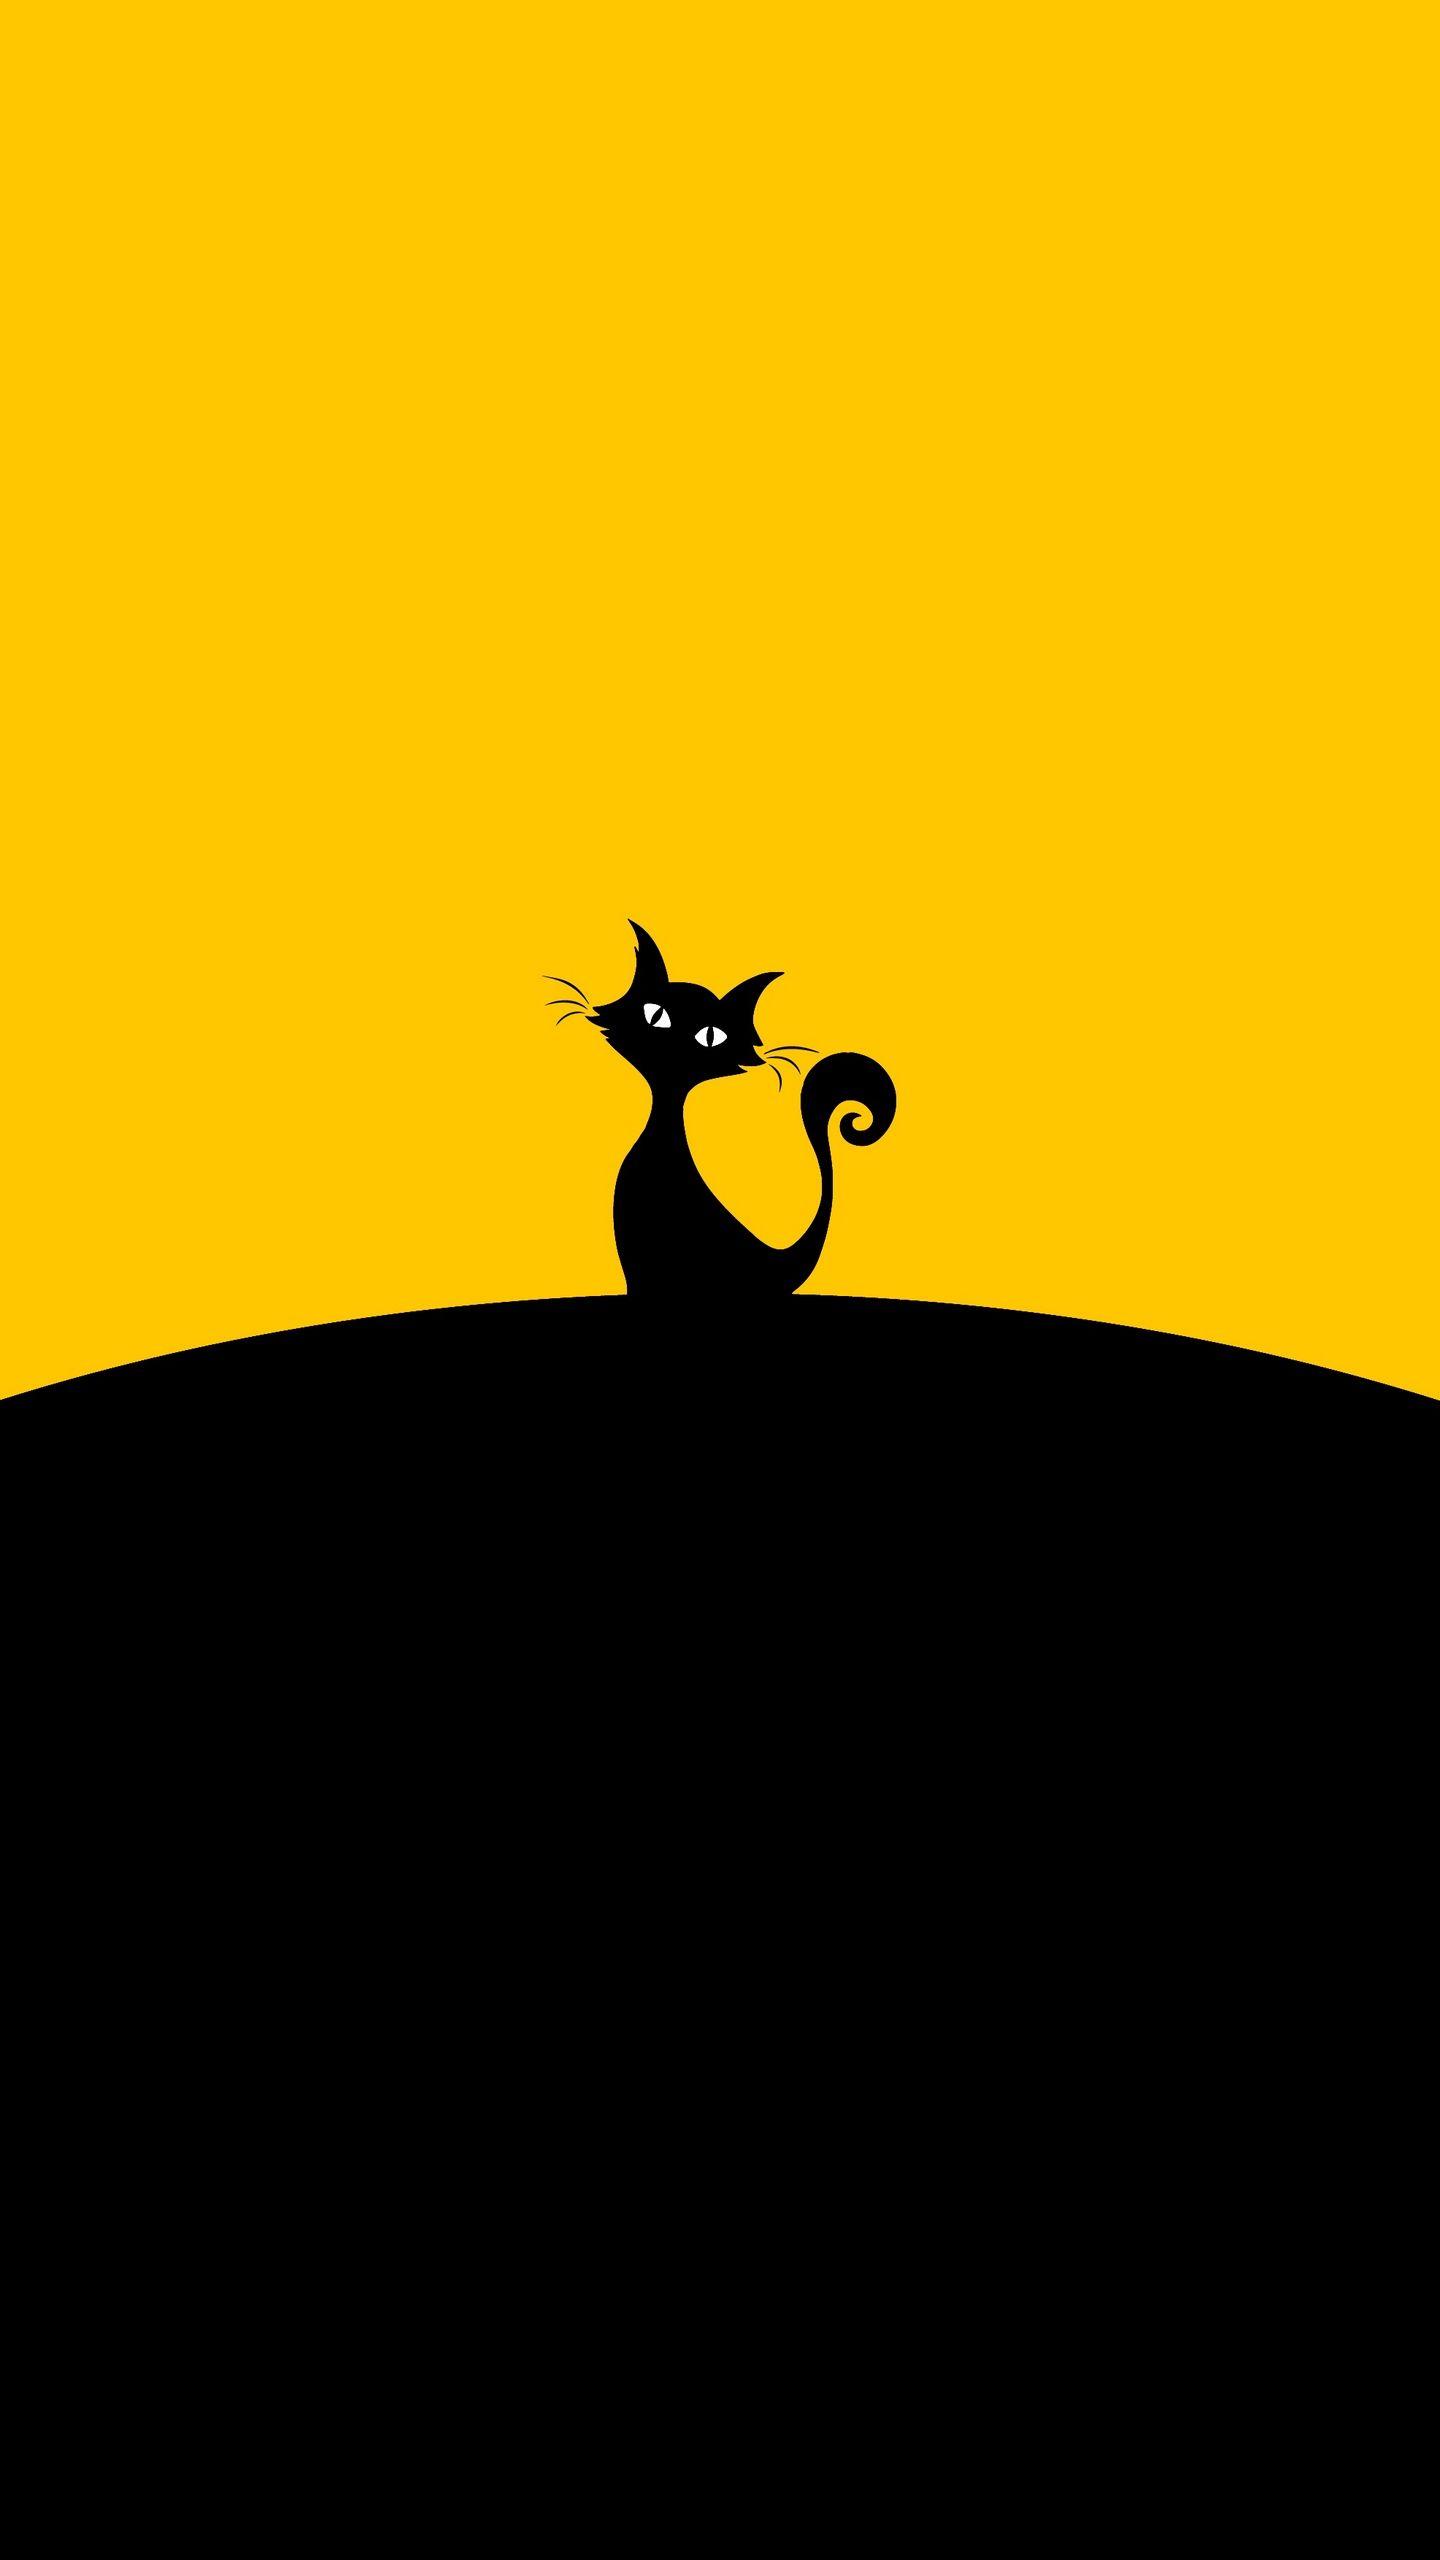 Cat Minimalist Wallpapers - Top Free Cat Minimalist Backgrounds ...